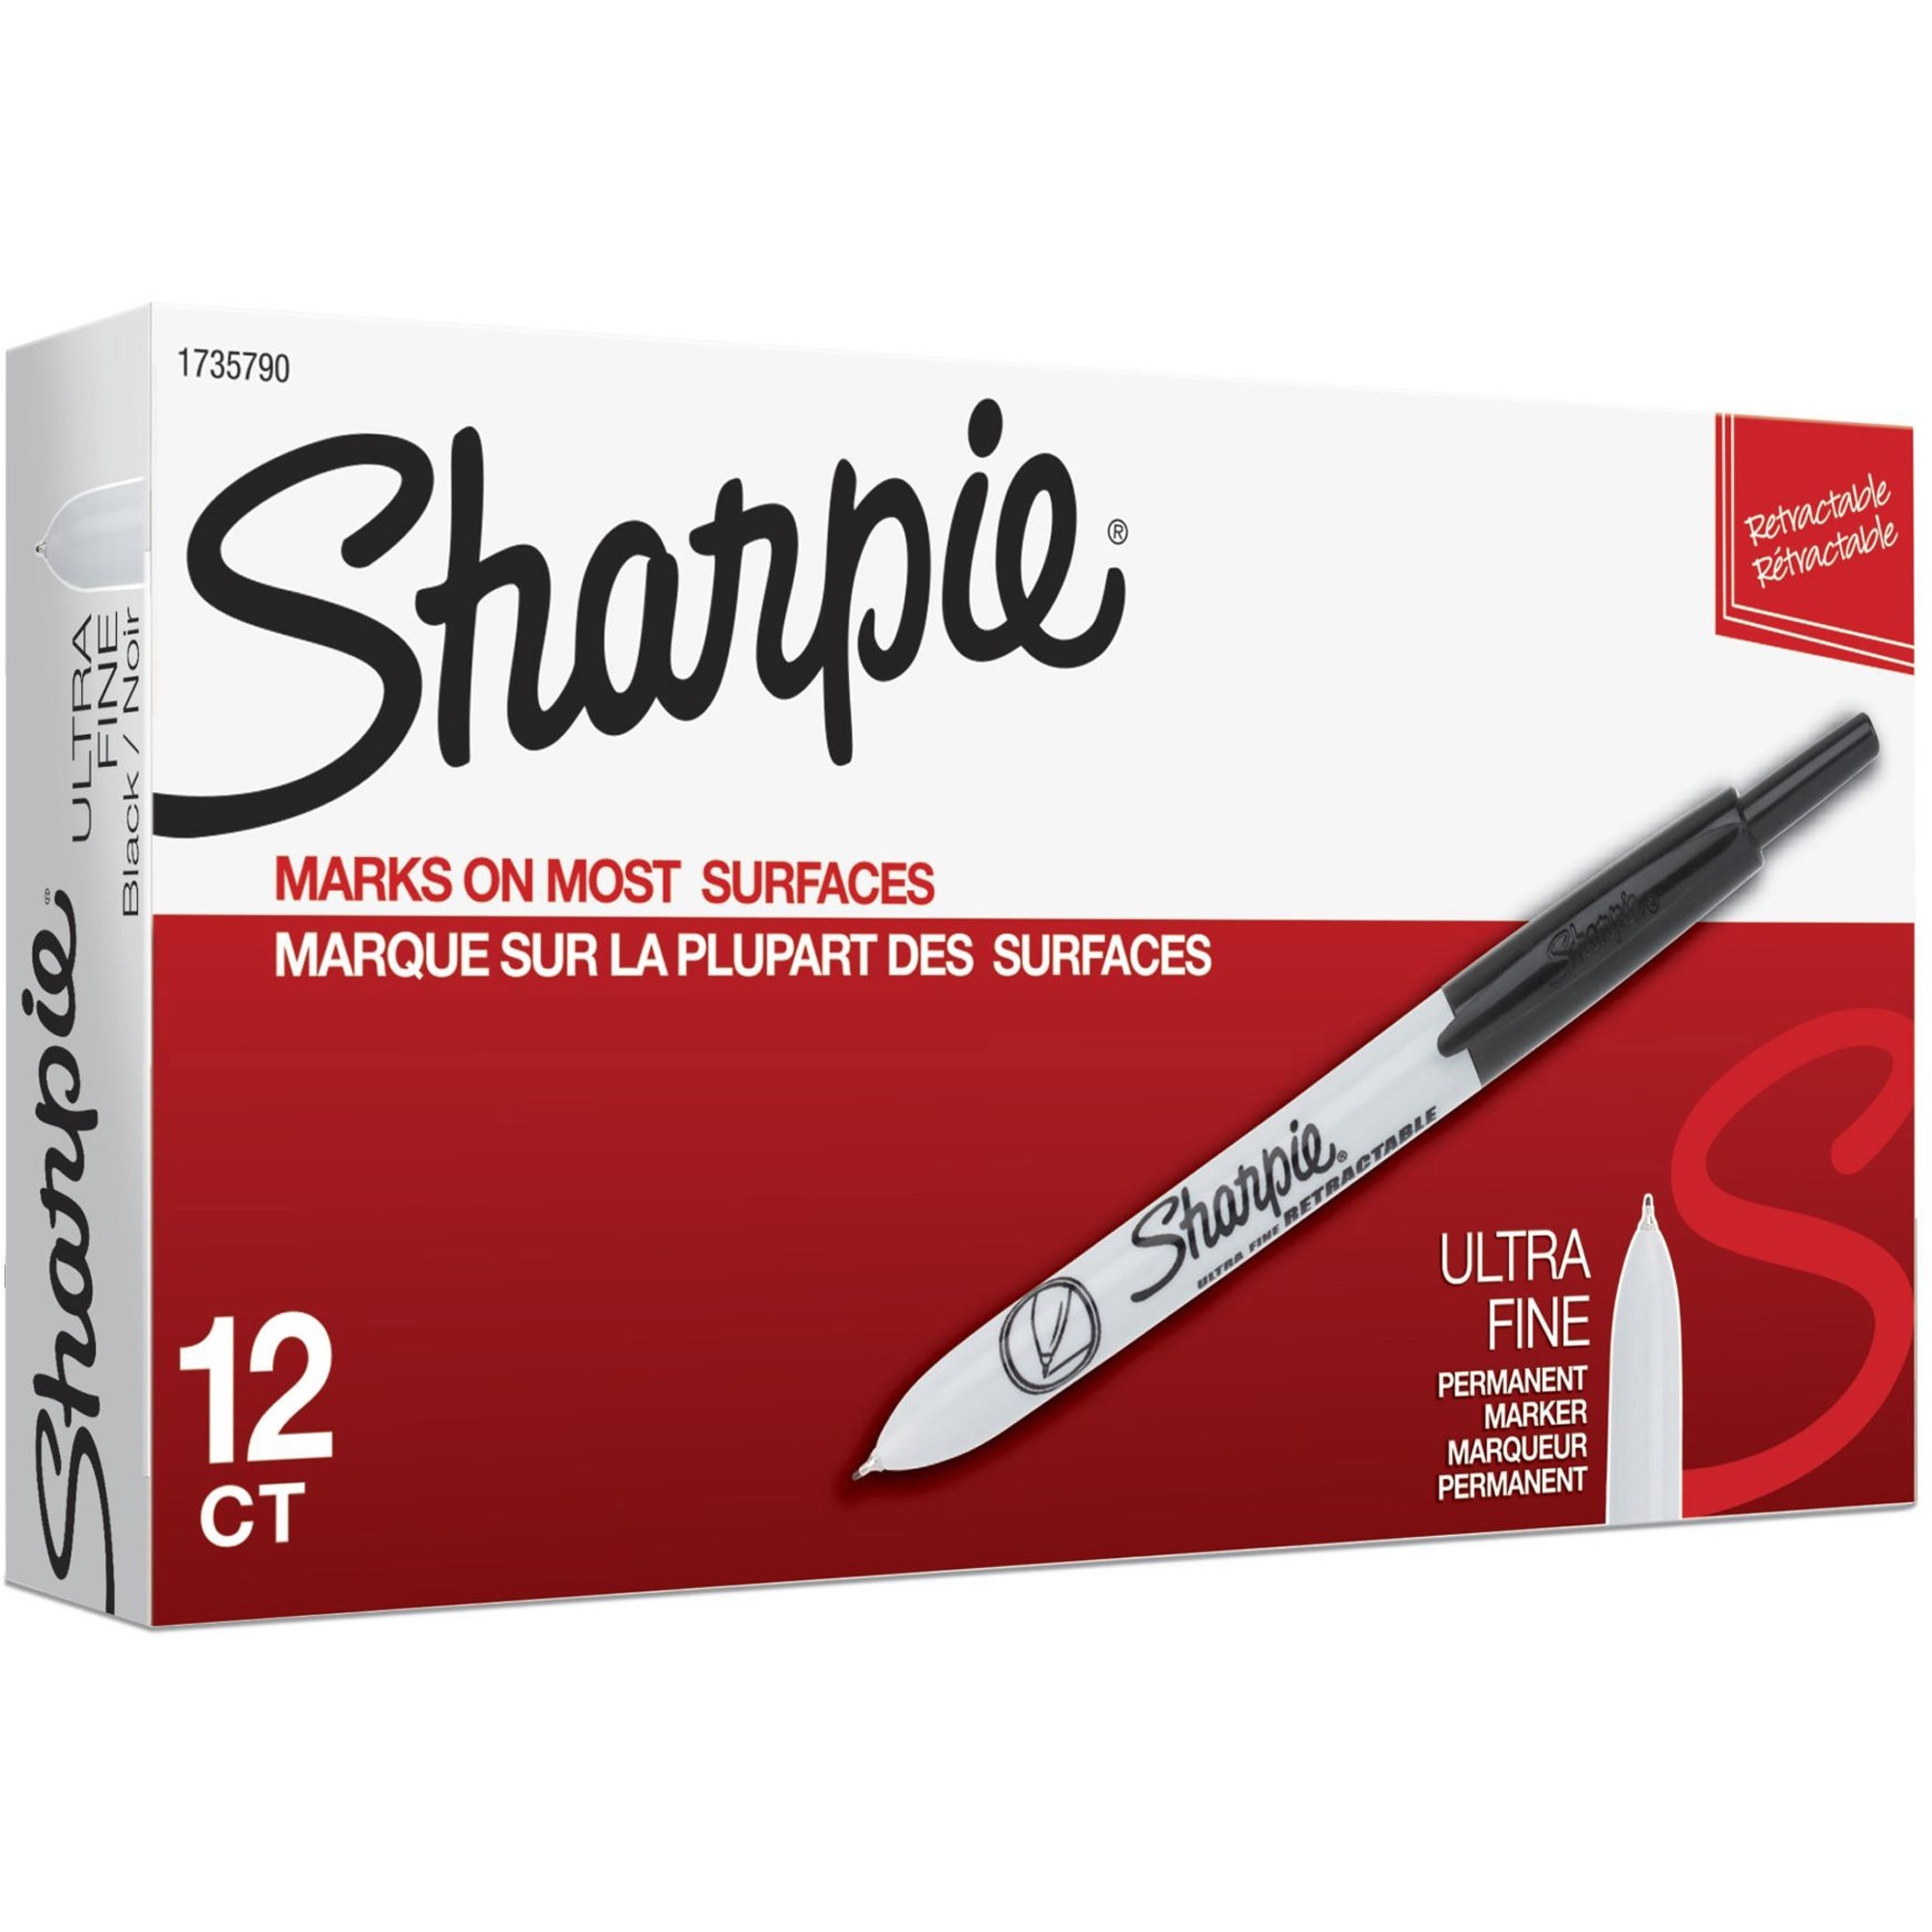 Marker Holder for Sharpie ULTRA FINE Permanent Markers